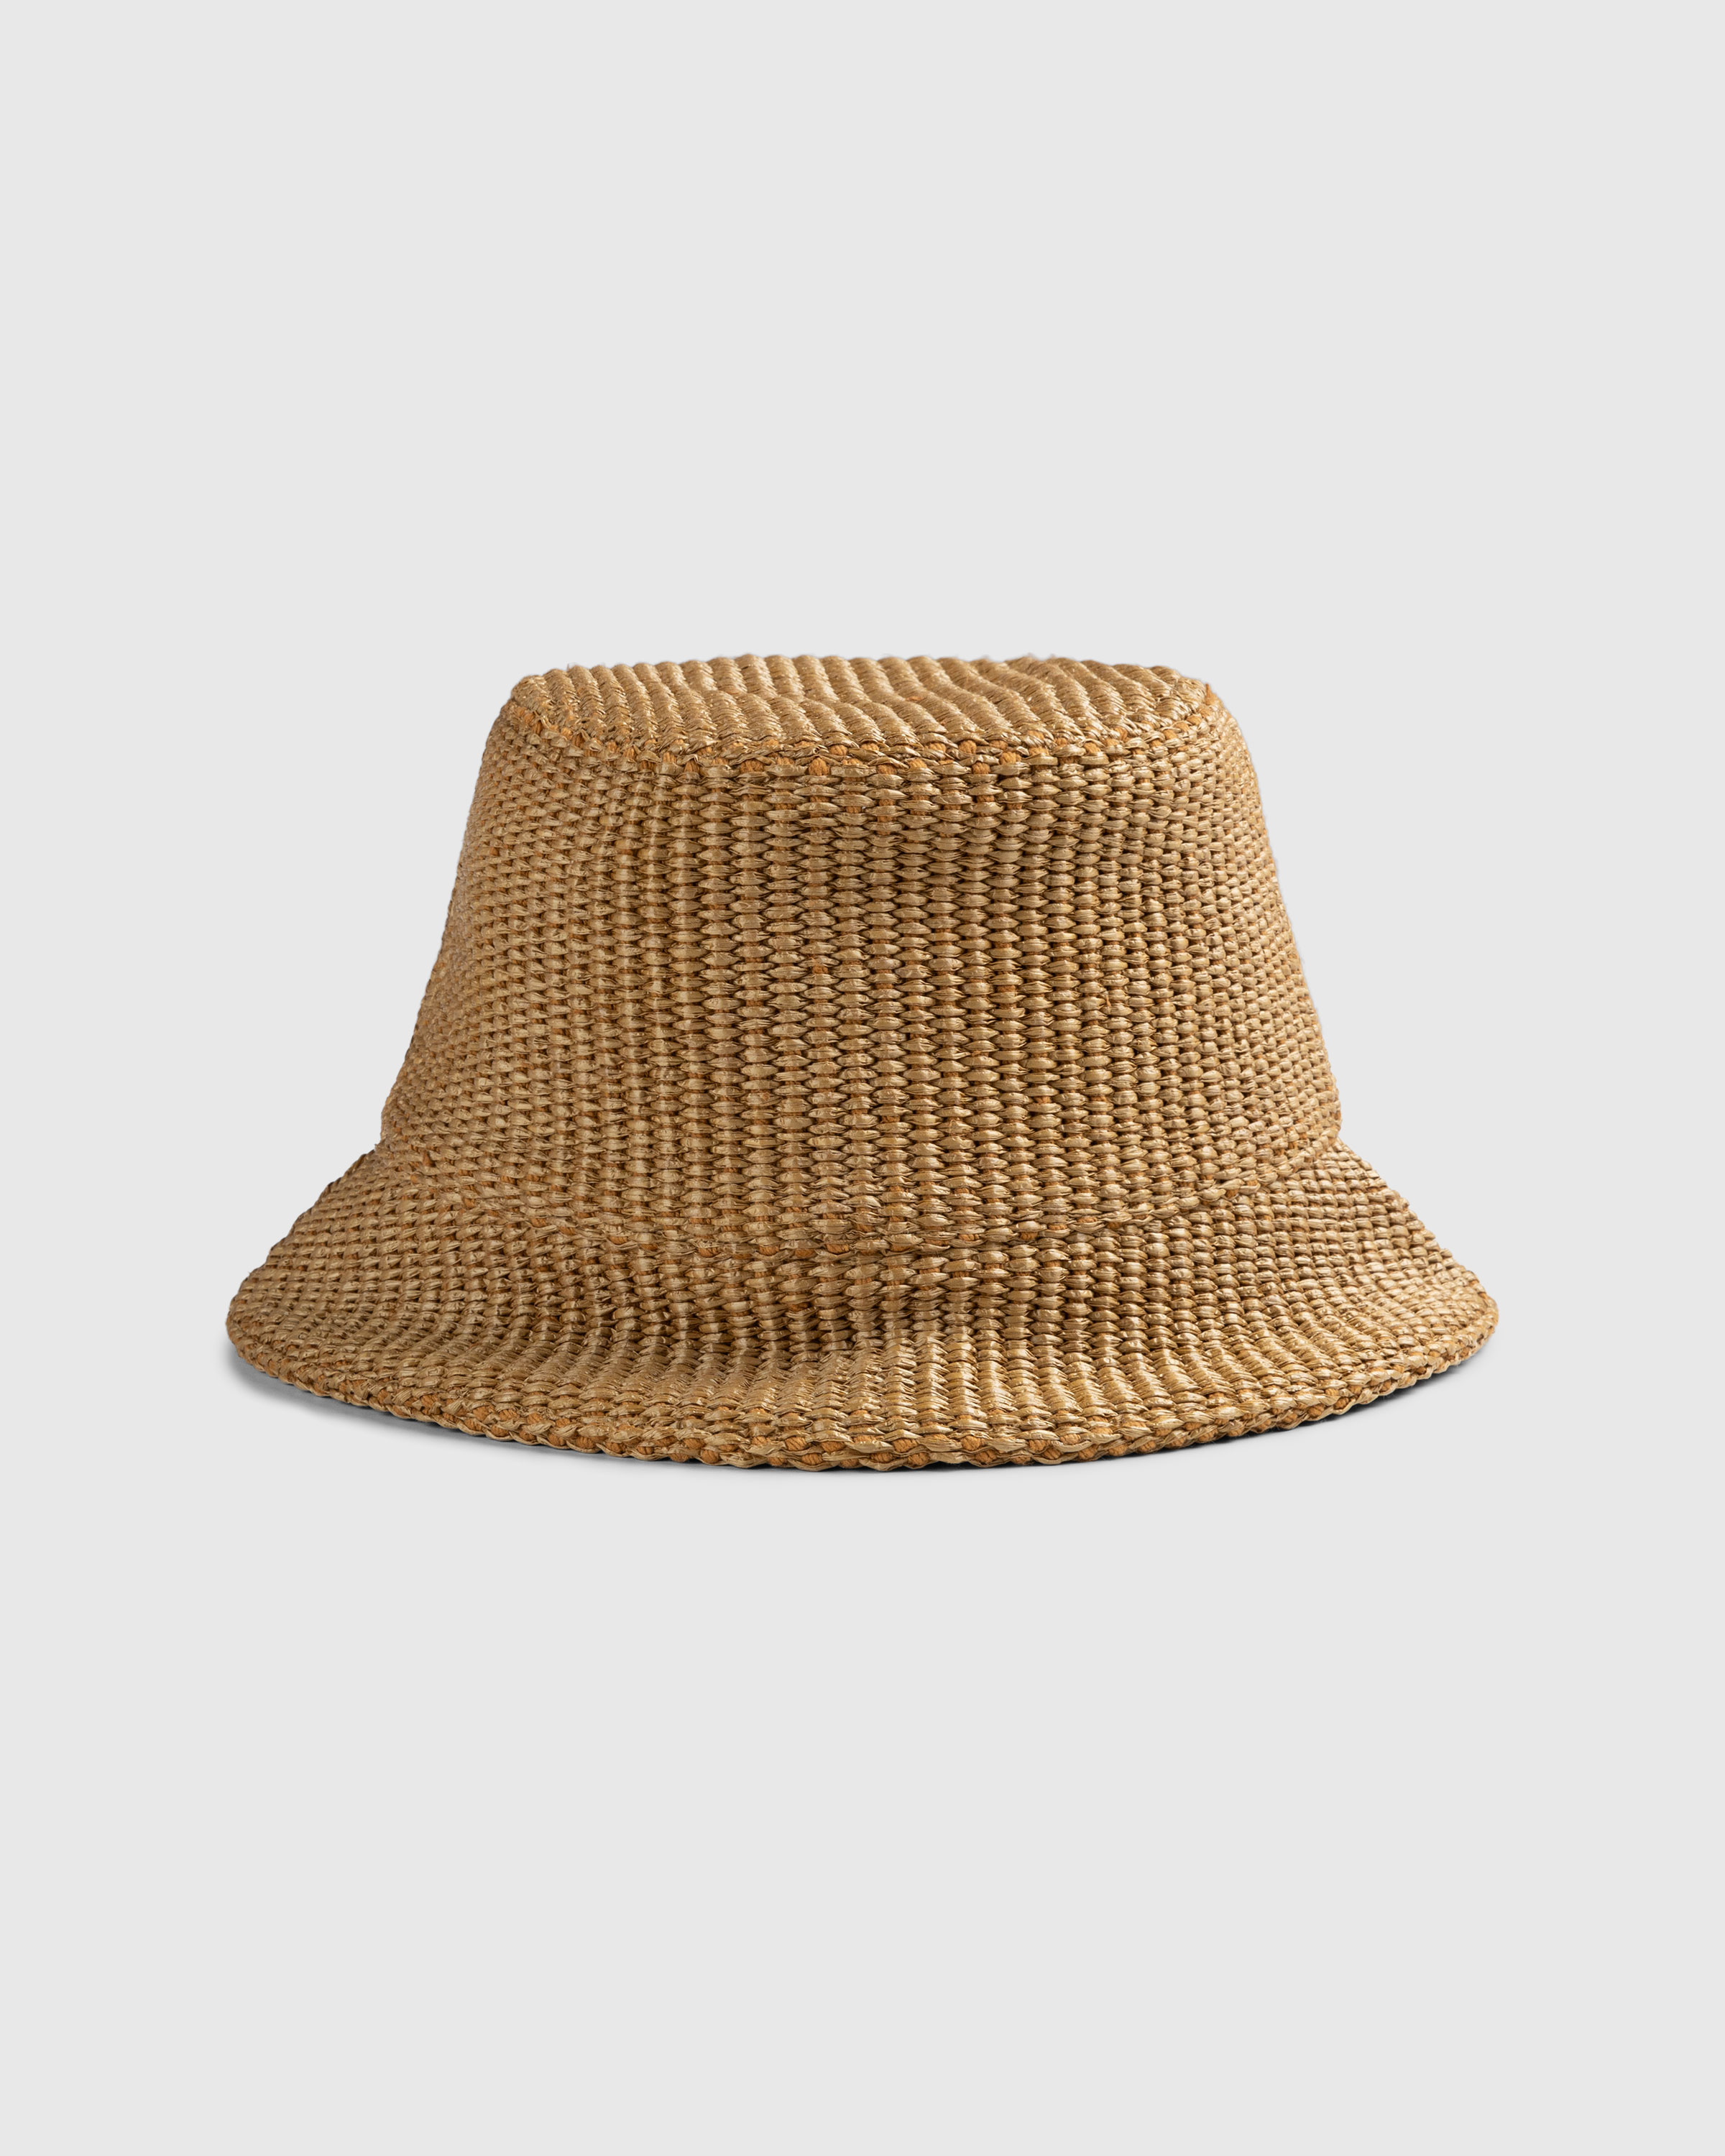 Marni - Raffia Bucket Hat Caramel - Accessories - Brown - Image 2